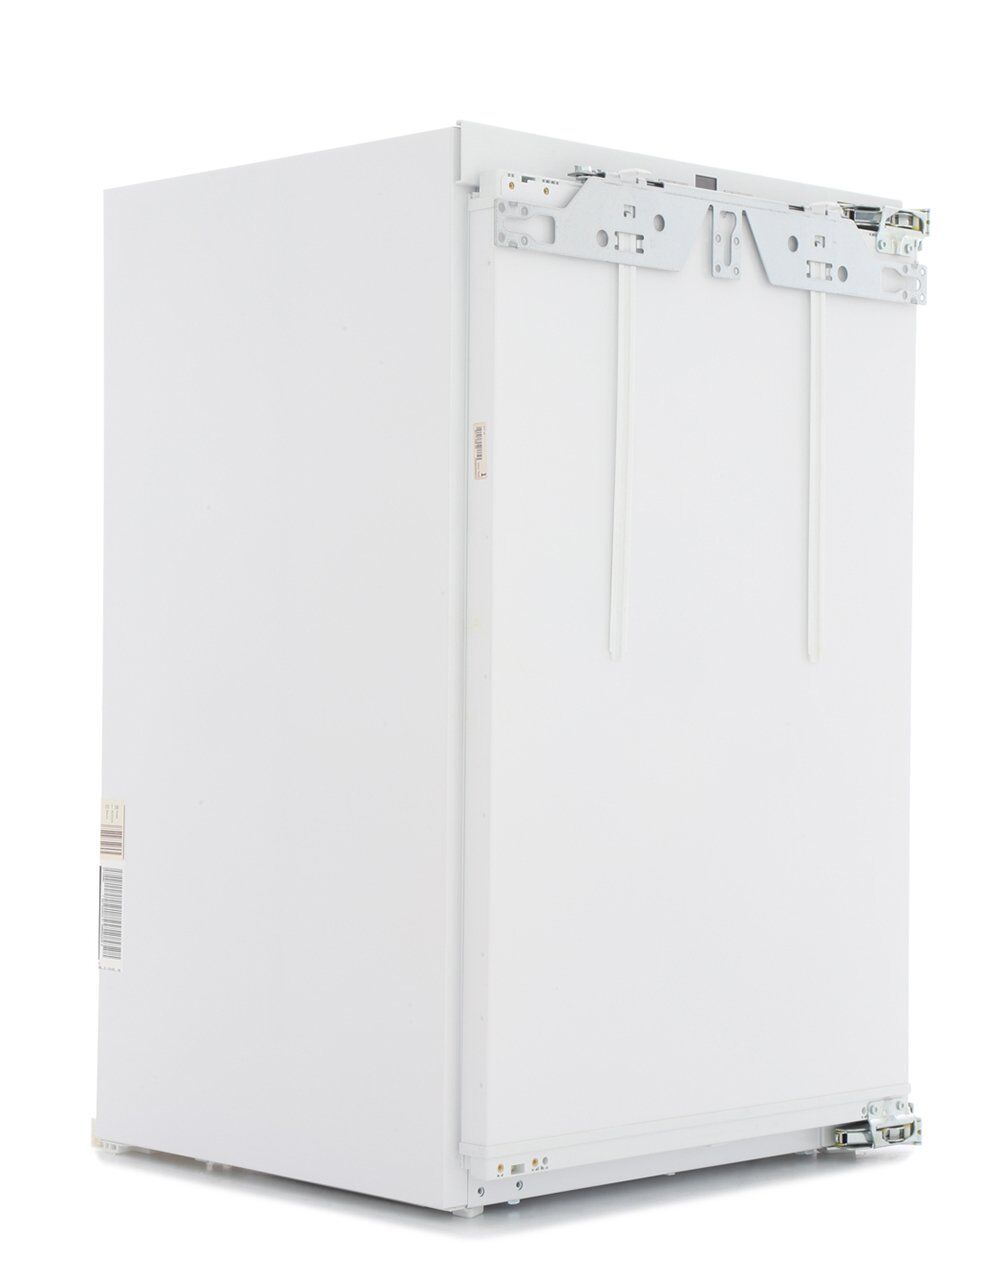 Miele F32202i Static Built In Freezer - White